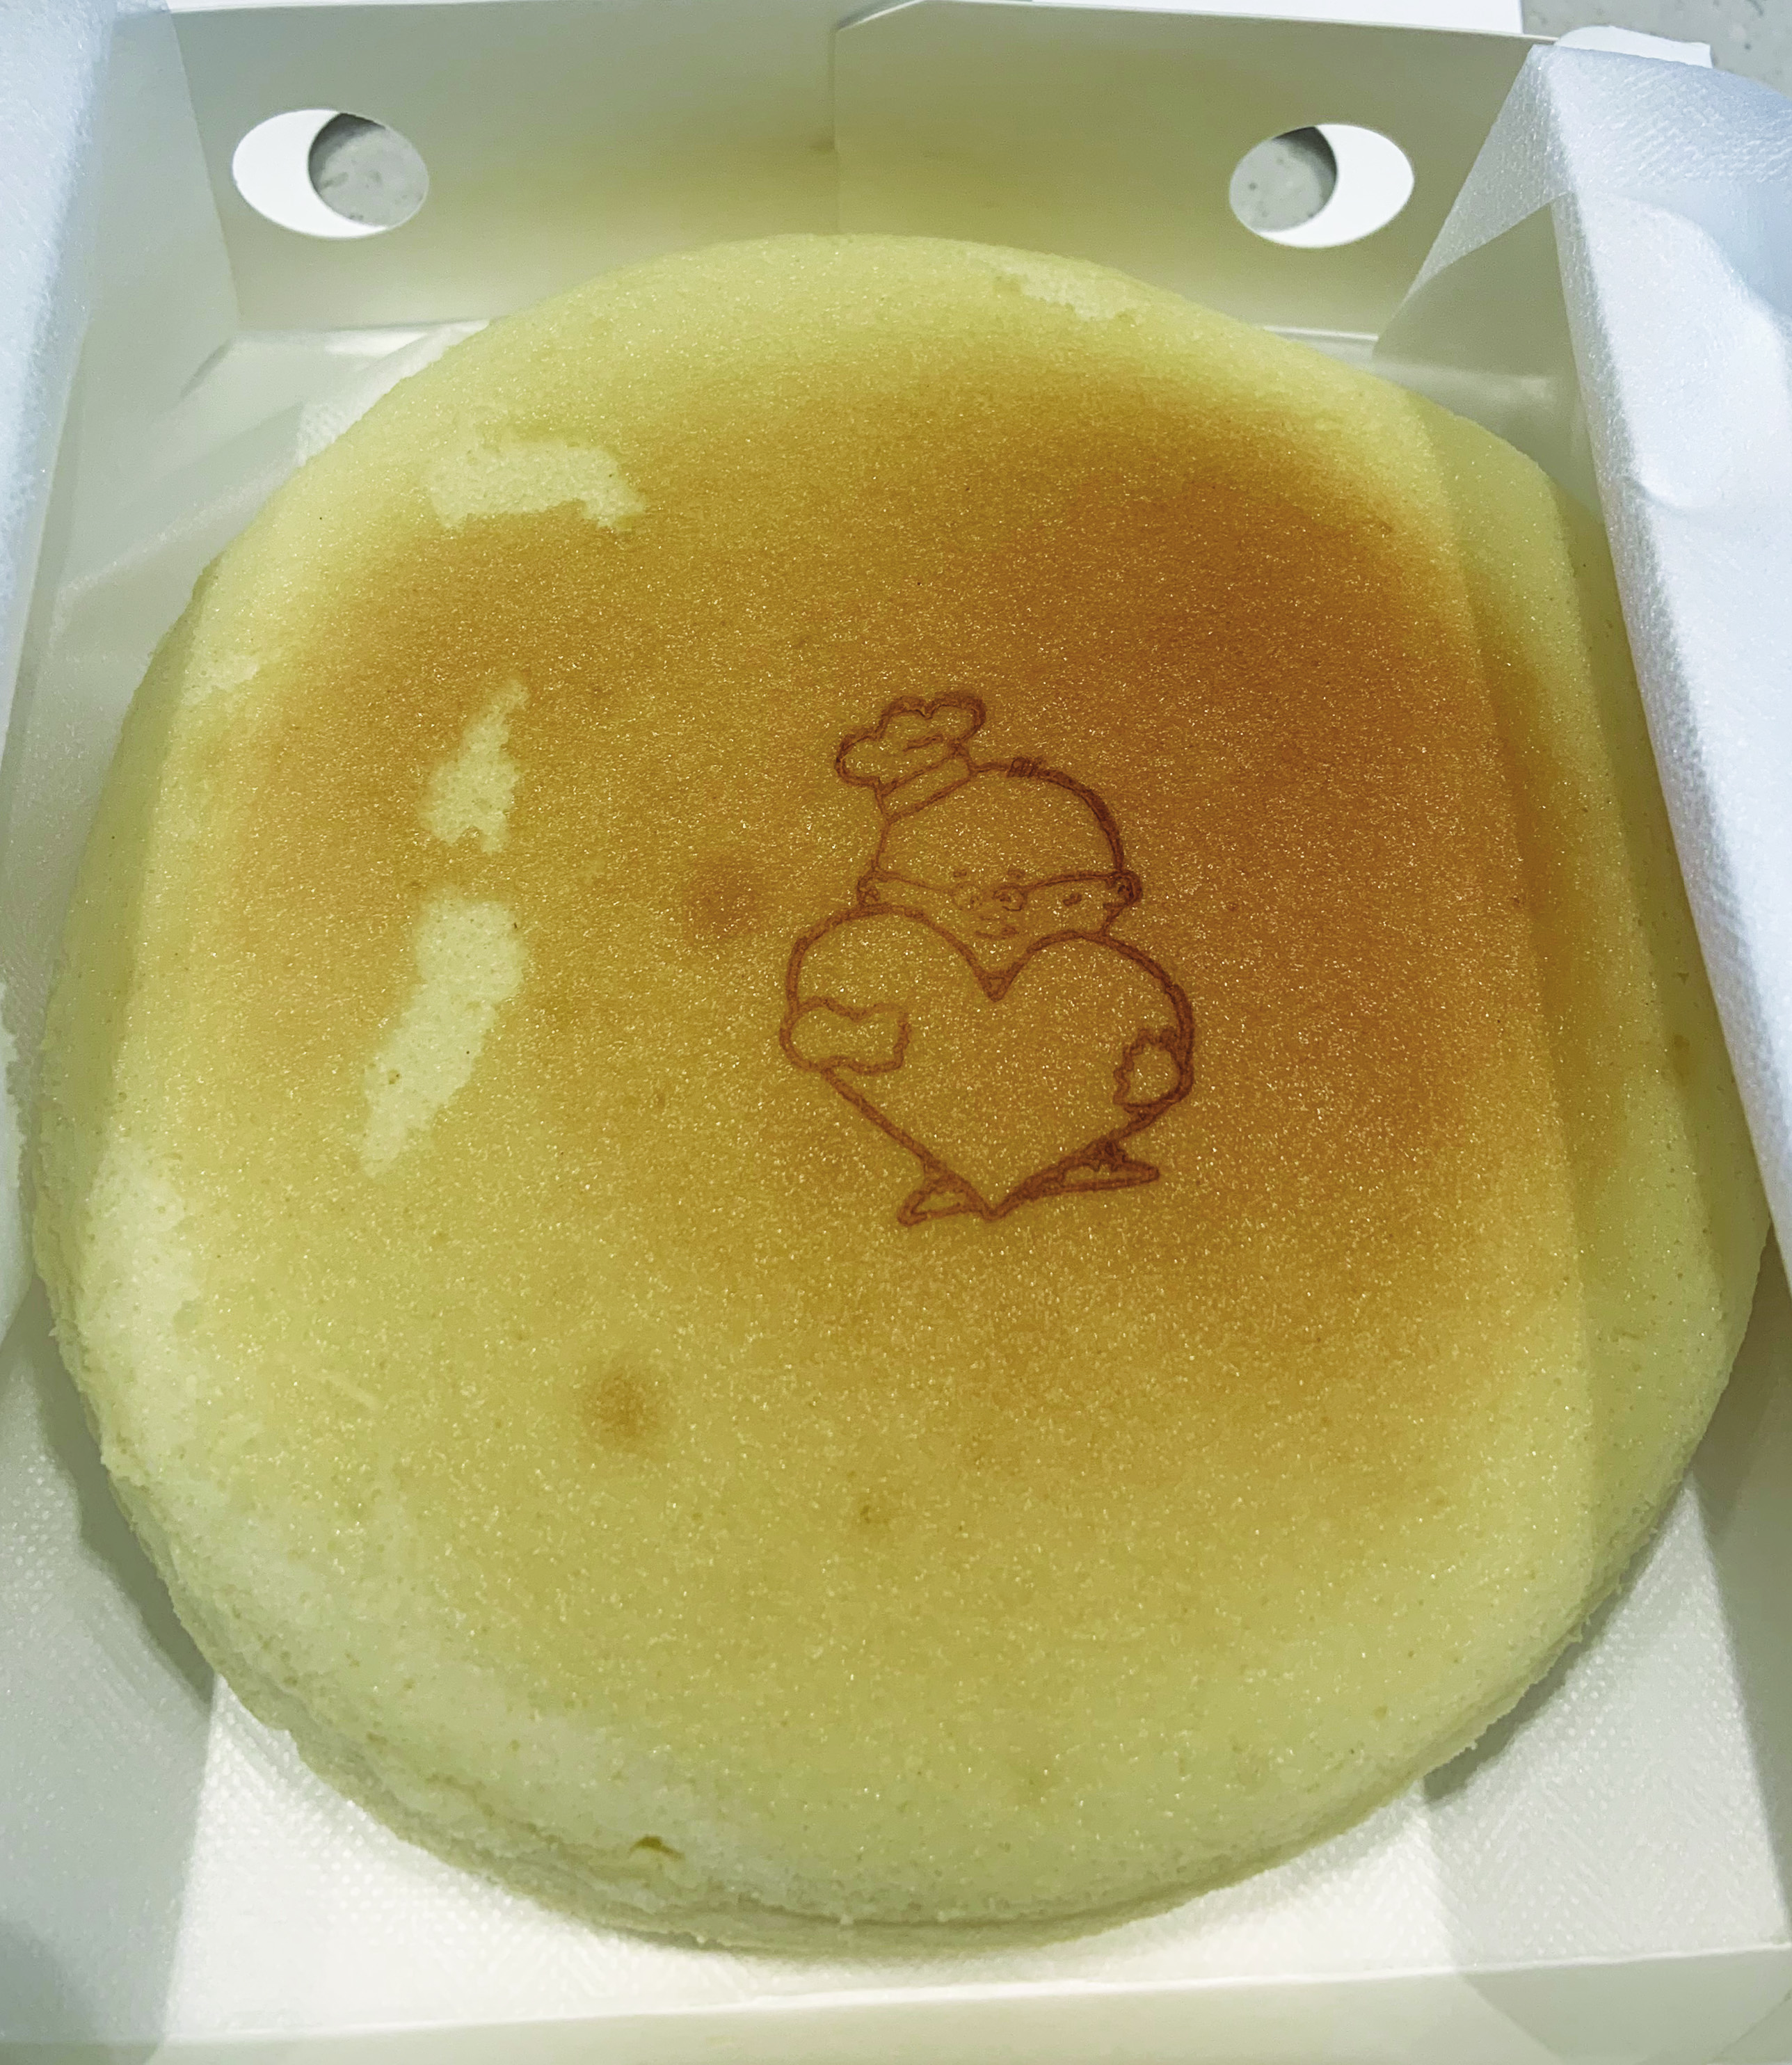 Uncle Tetsu’s original cheesecake displays a cartoon image of Tetsushi Mizokami.